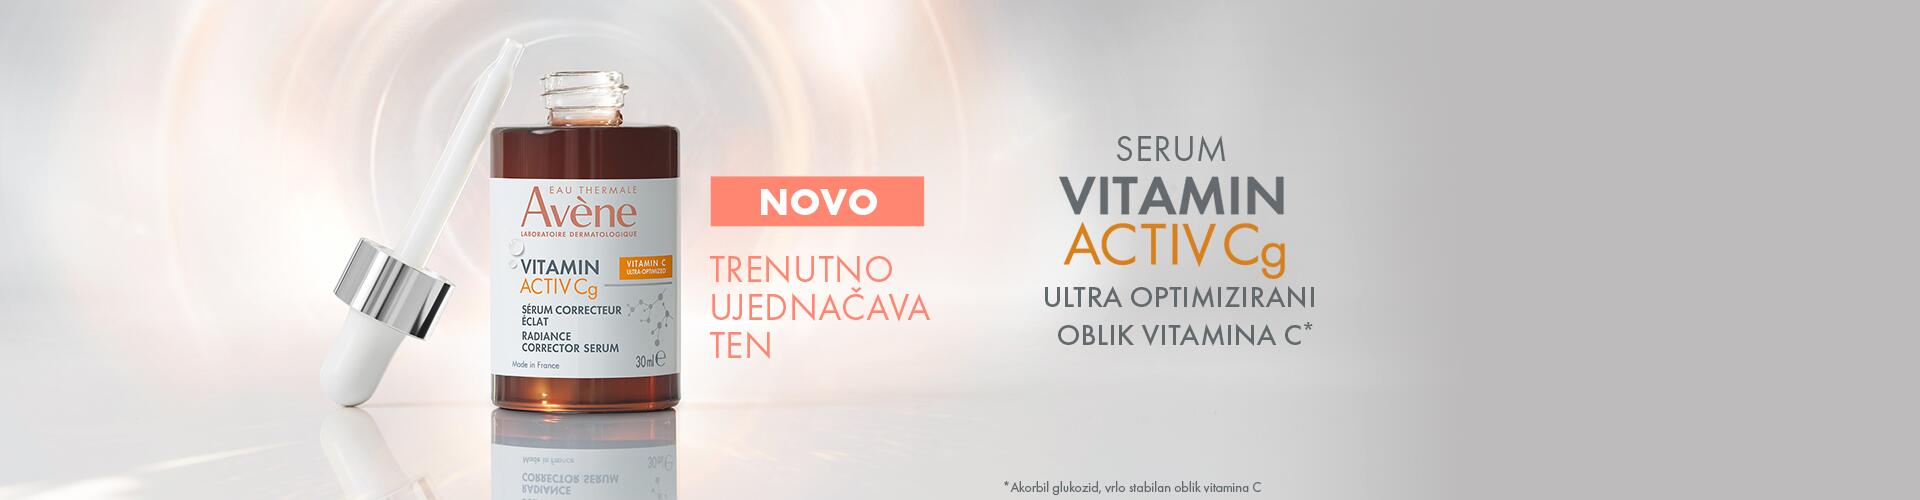 av_vitamin_cg_serum_website_cover_1920x500_HR